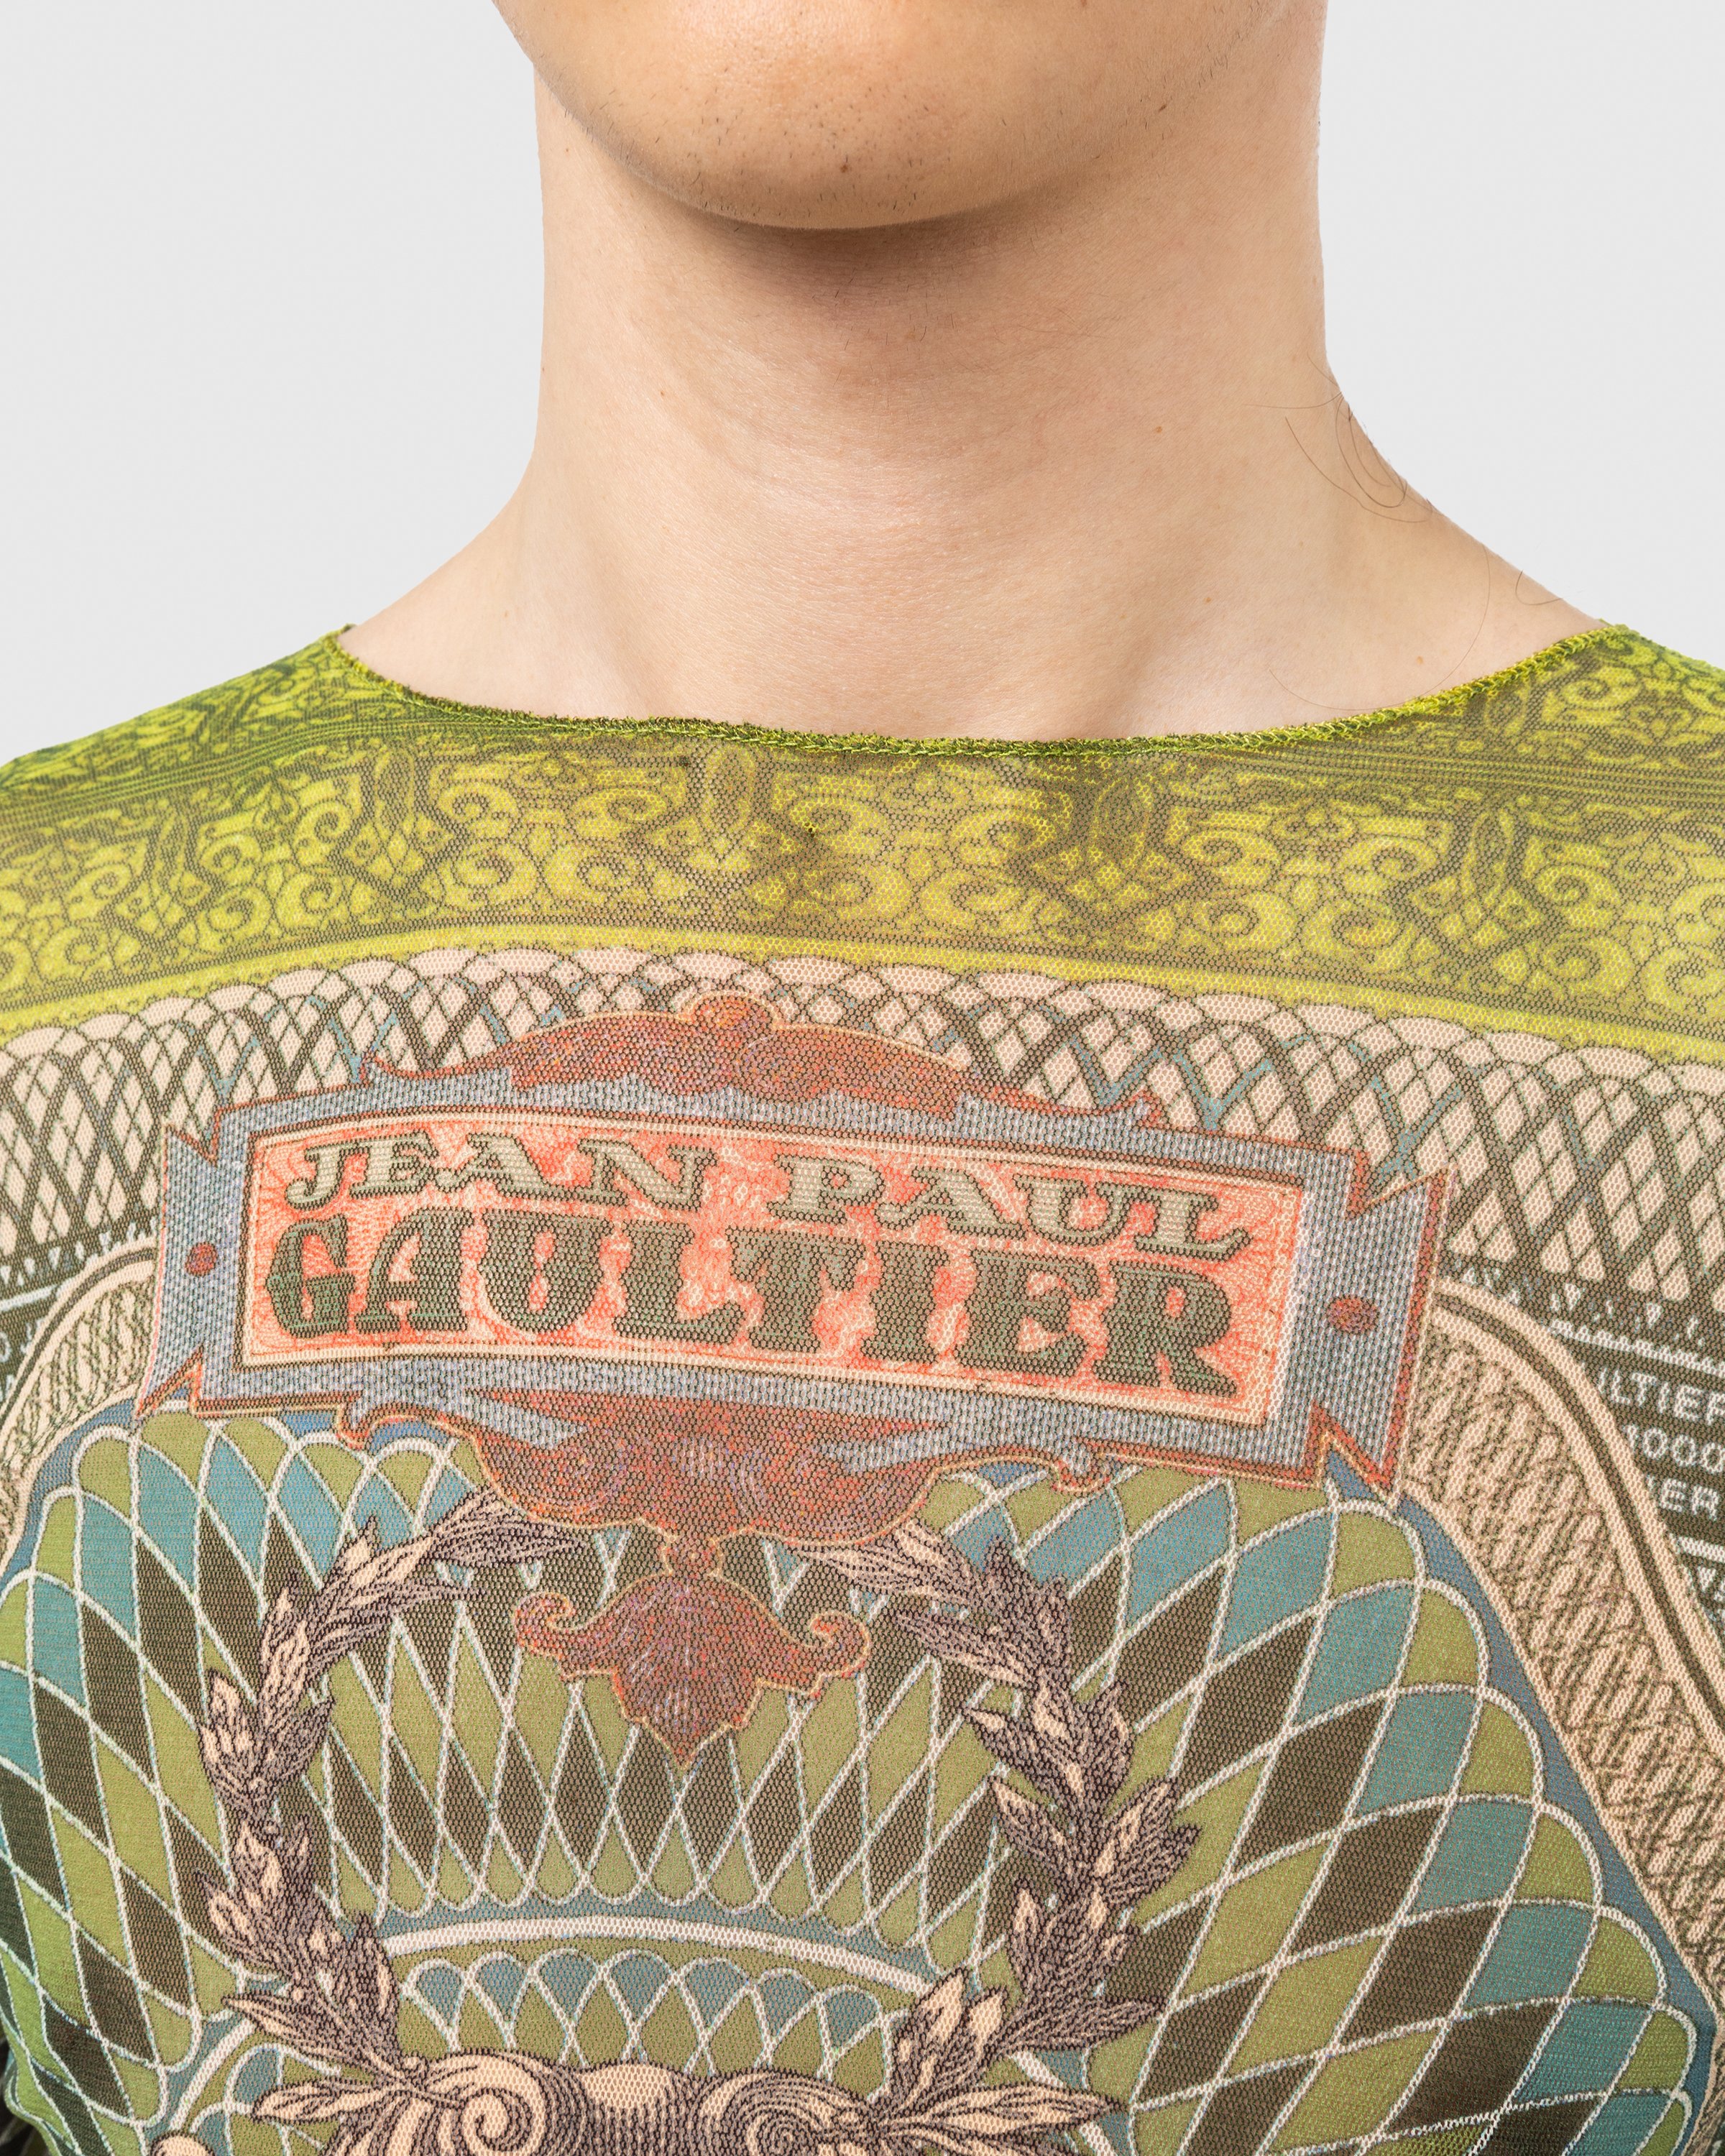 Jean Paul Gaultier - Long-Sleeve Banknote Top Multi - Clothing - Green - Image 4